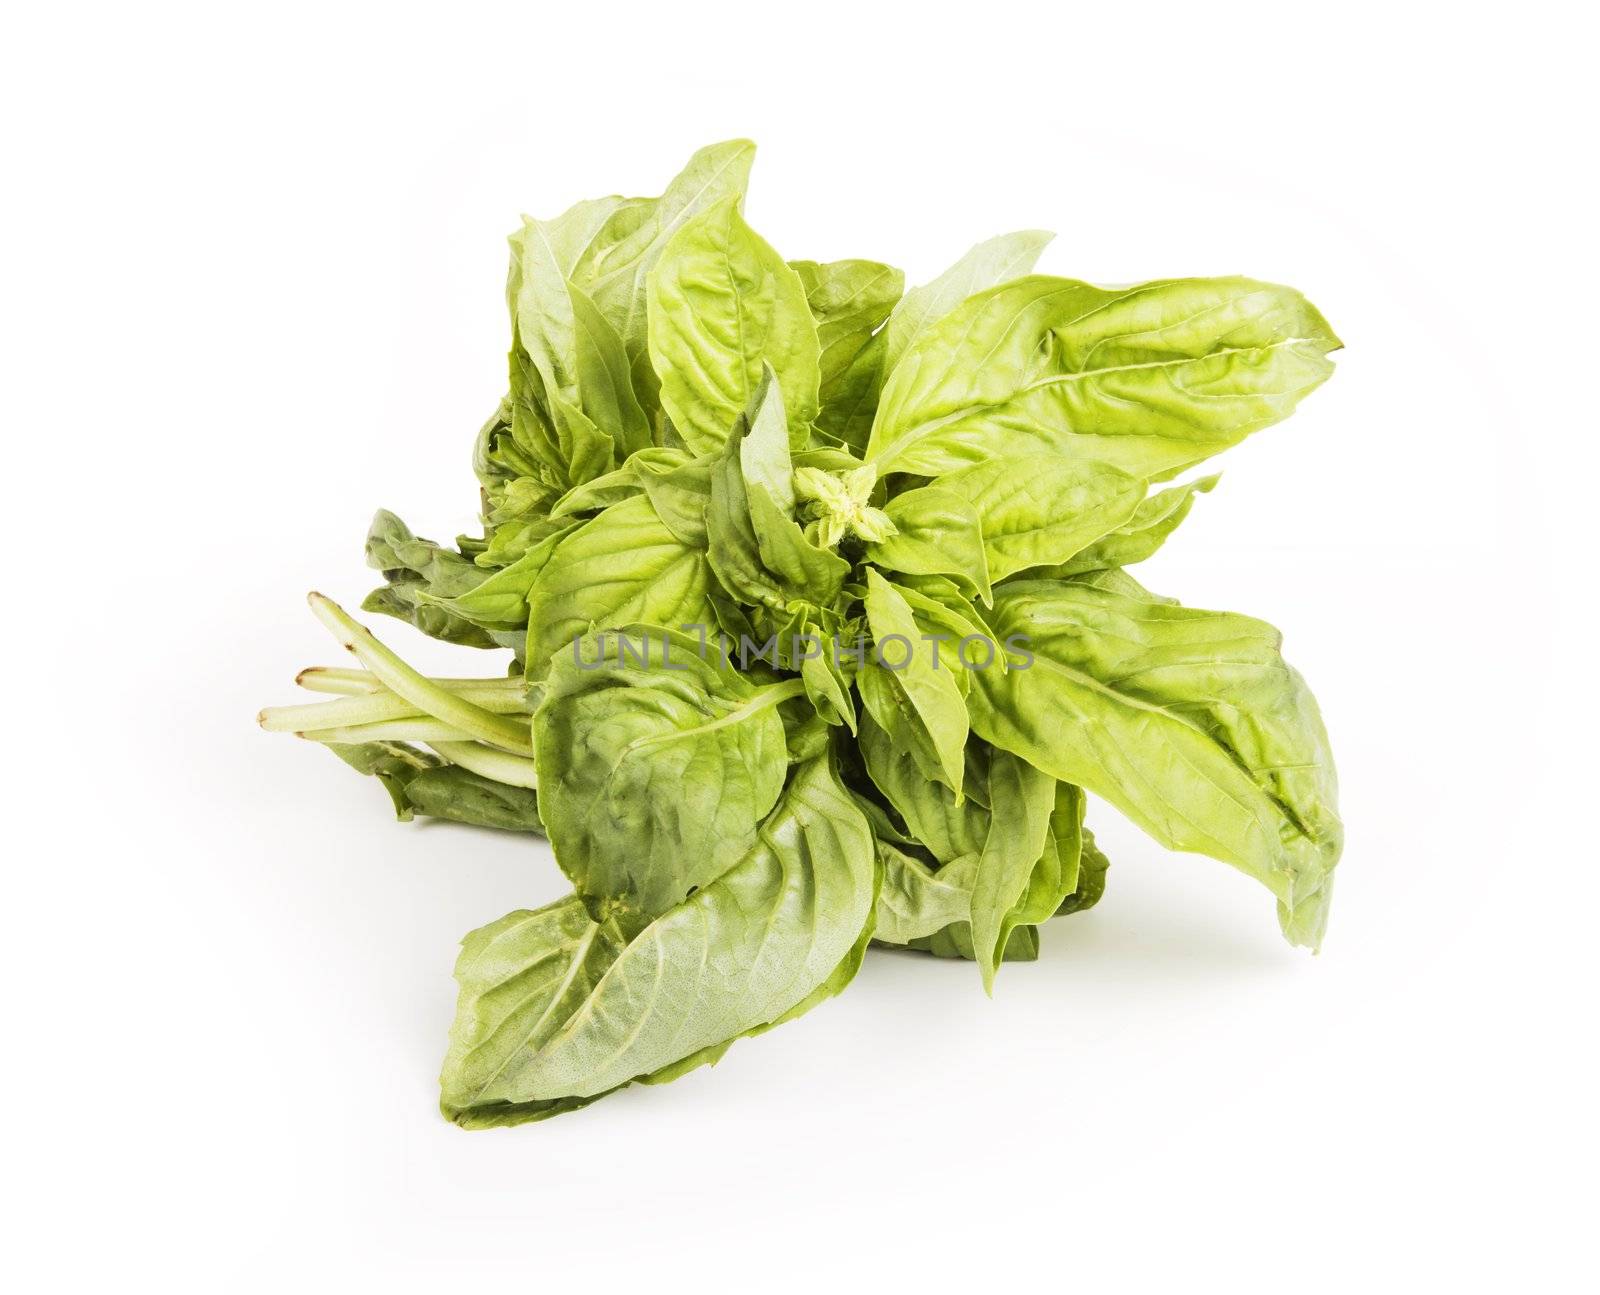 Small bundle of leafy green basil herb